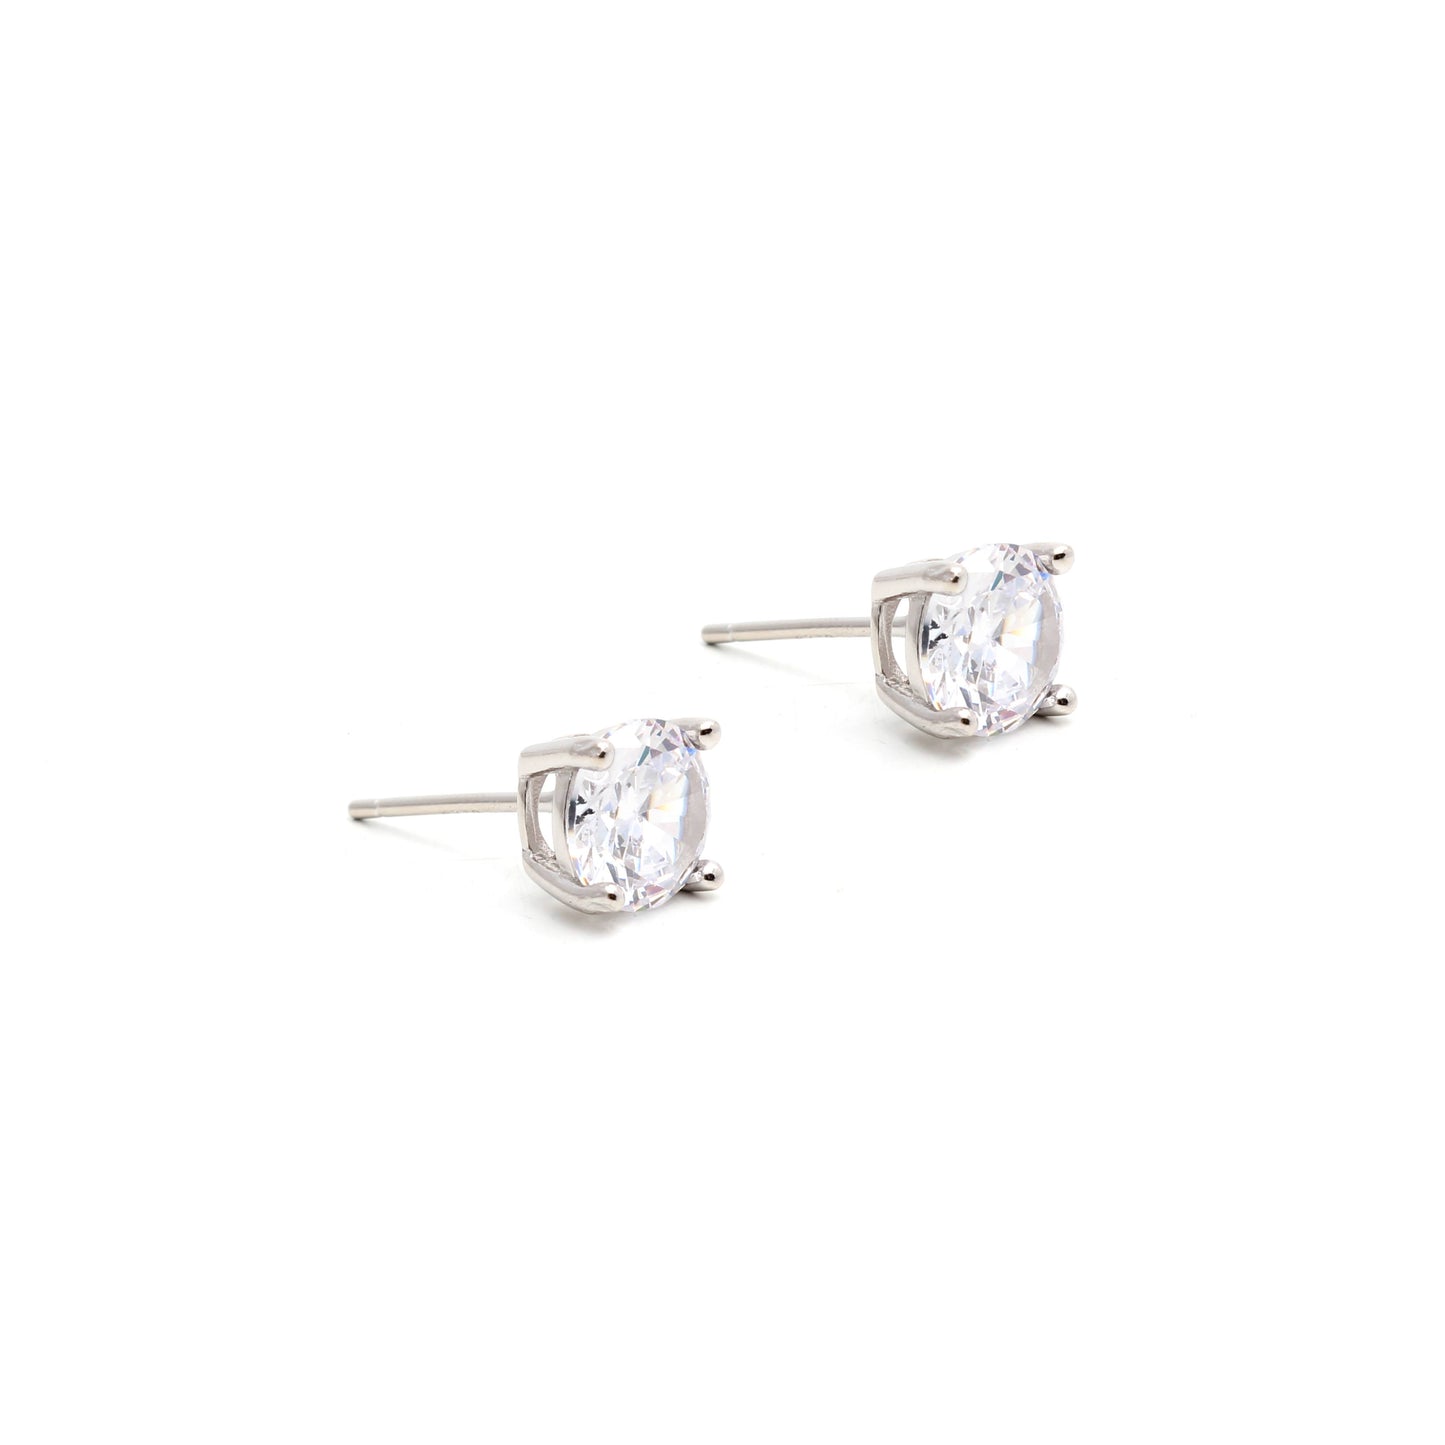 Solitaire earrings in 925 sterling silver